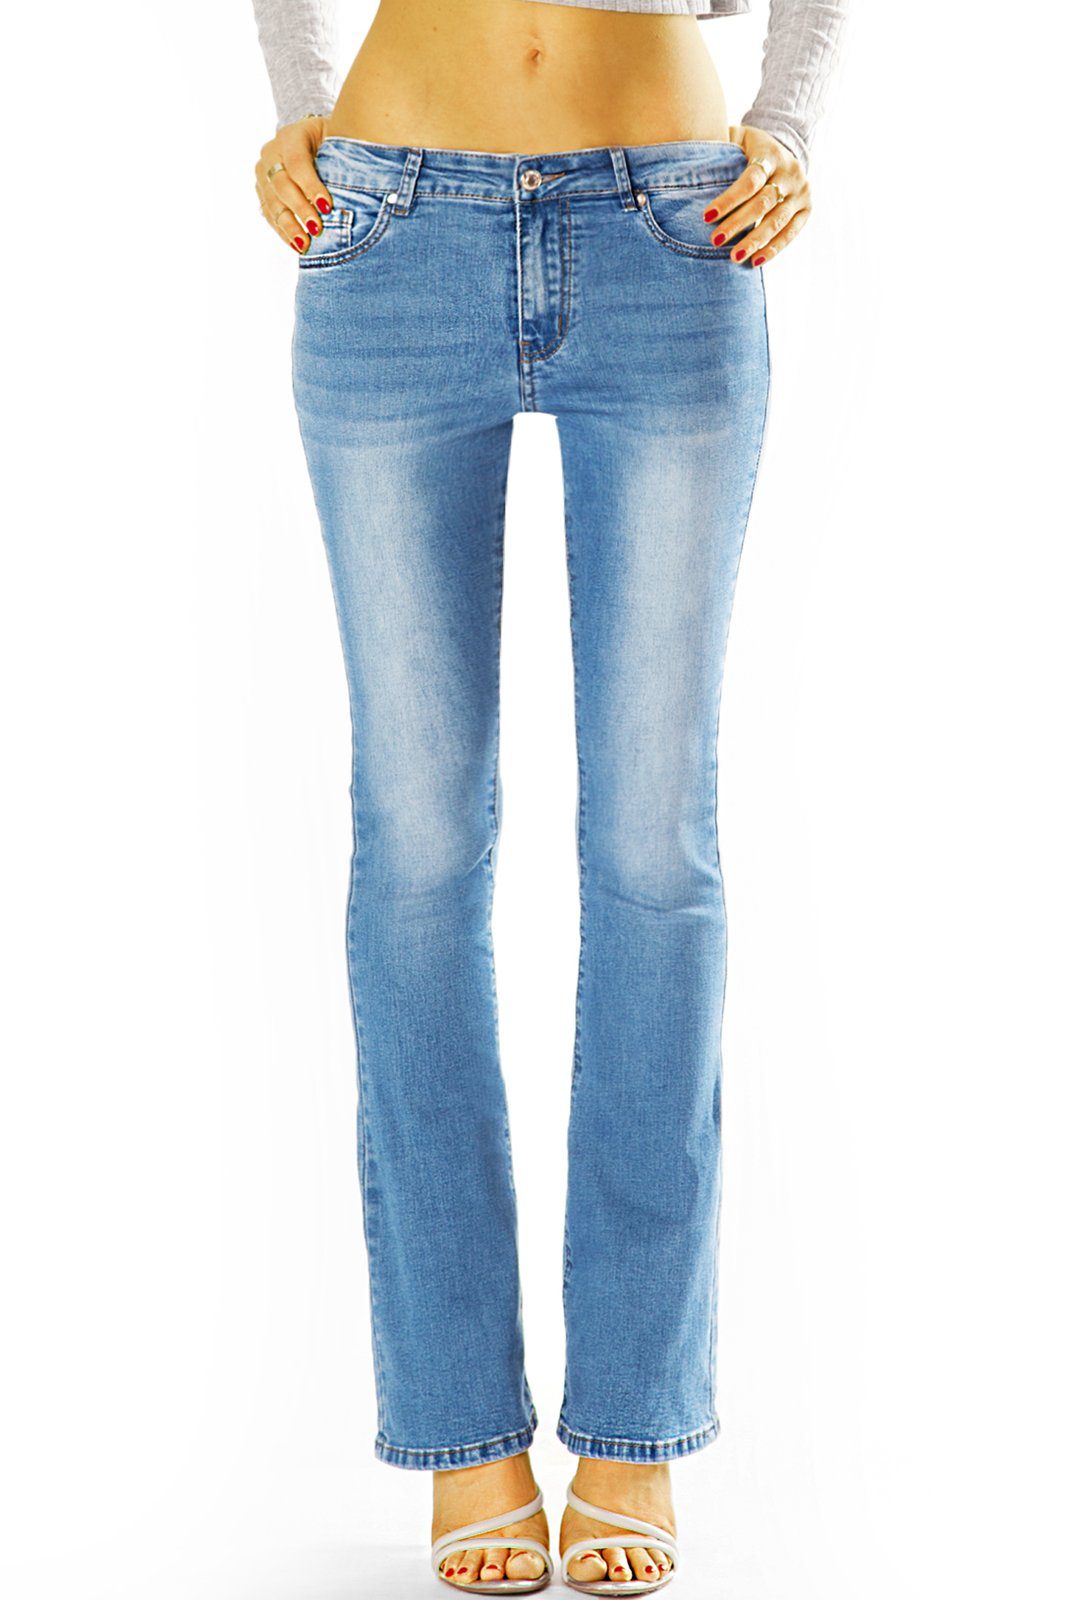 - Hose 5-Pocket-Style Jeans Medium Bootcut Stretch-Anteil, Waist mit styled be j13L - Damen Schlagjeans Bootcut-Jeans